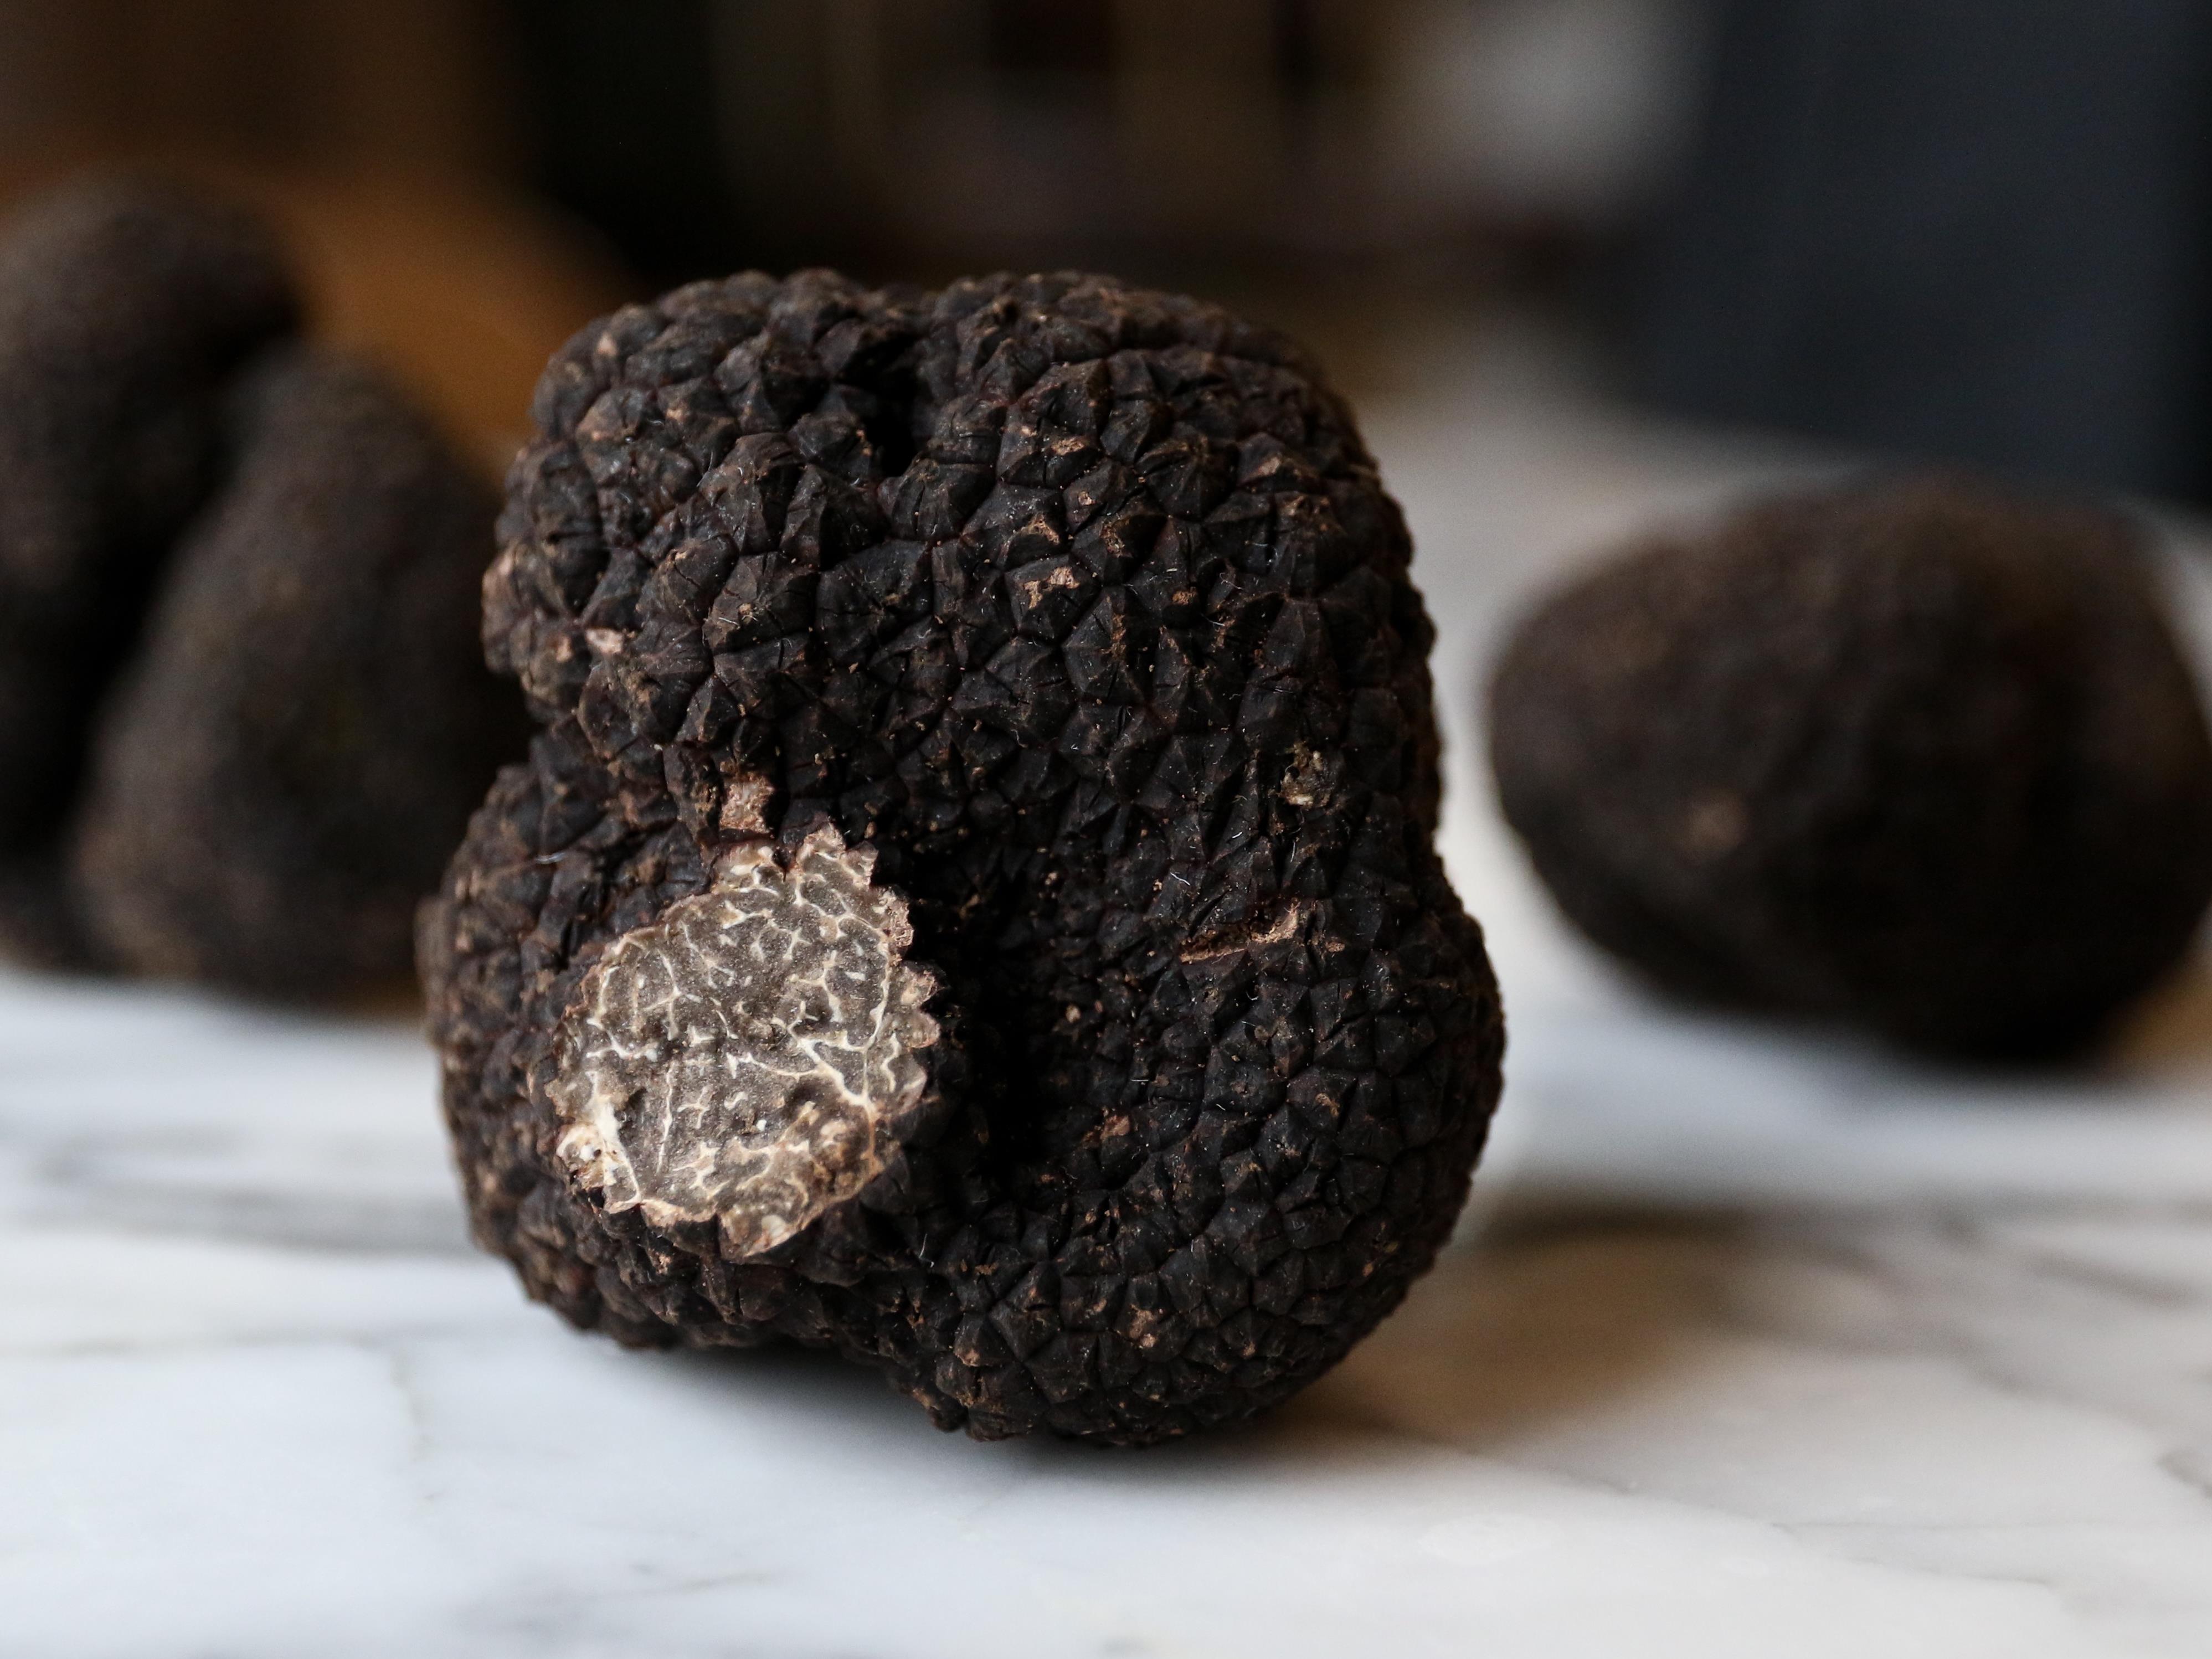 https://images.radio-canada.ca/v1/ici-info/4x3/cvld-truffe-battuto-truffe-dombrie-truffe-noire-nourriture-alimentation.jpg